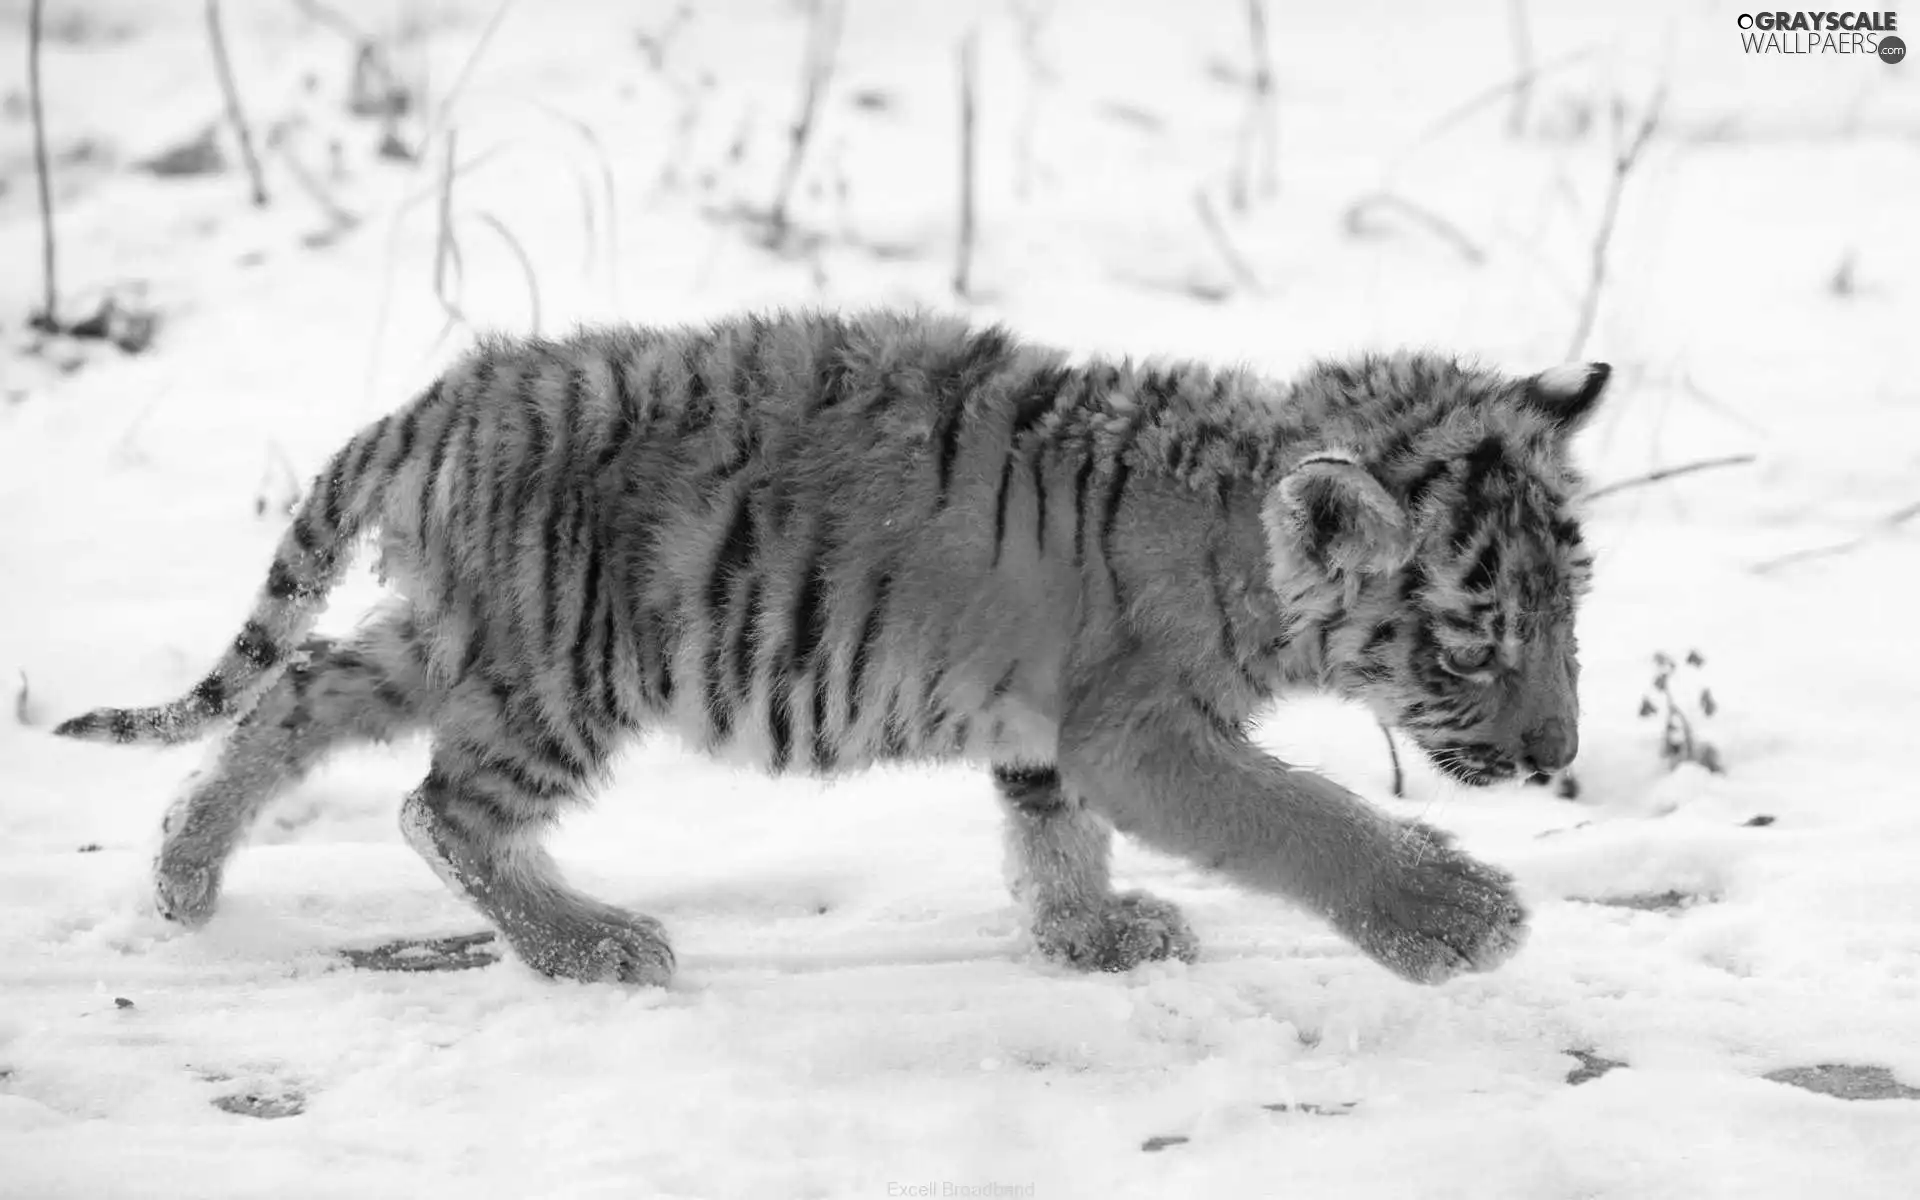 Tiger, snow